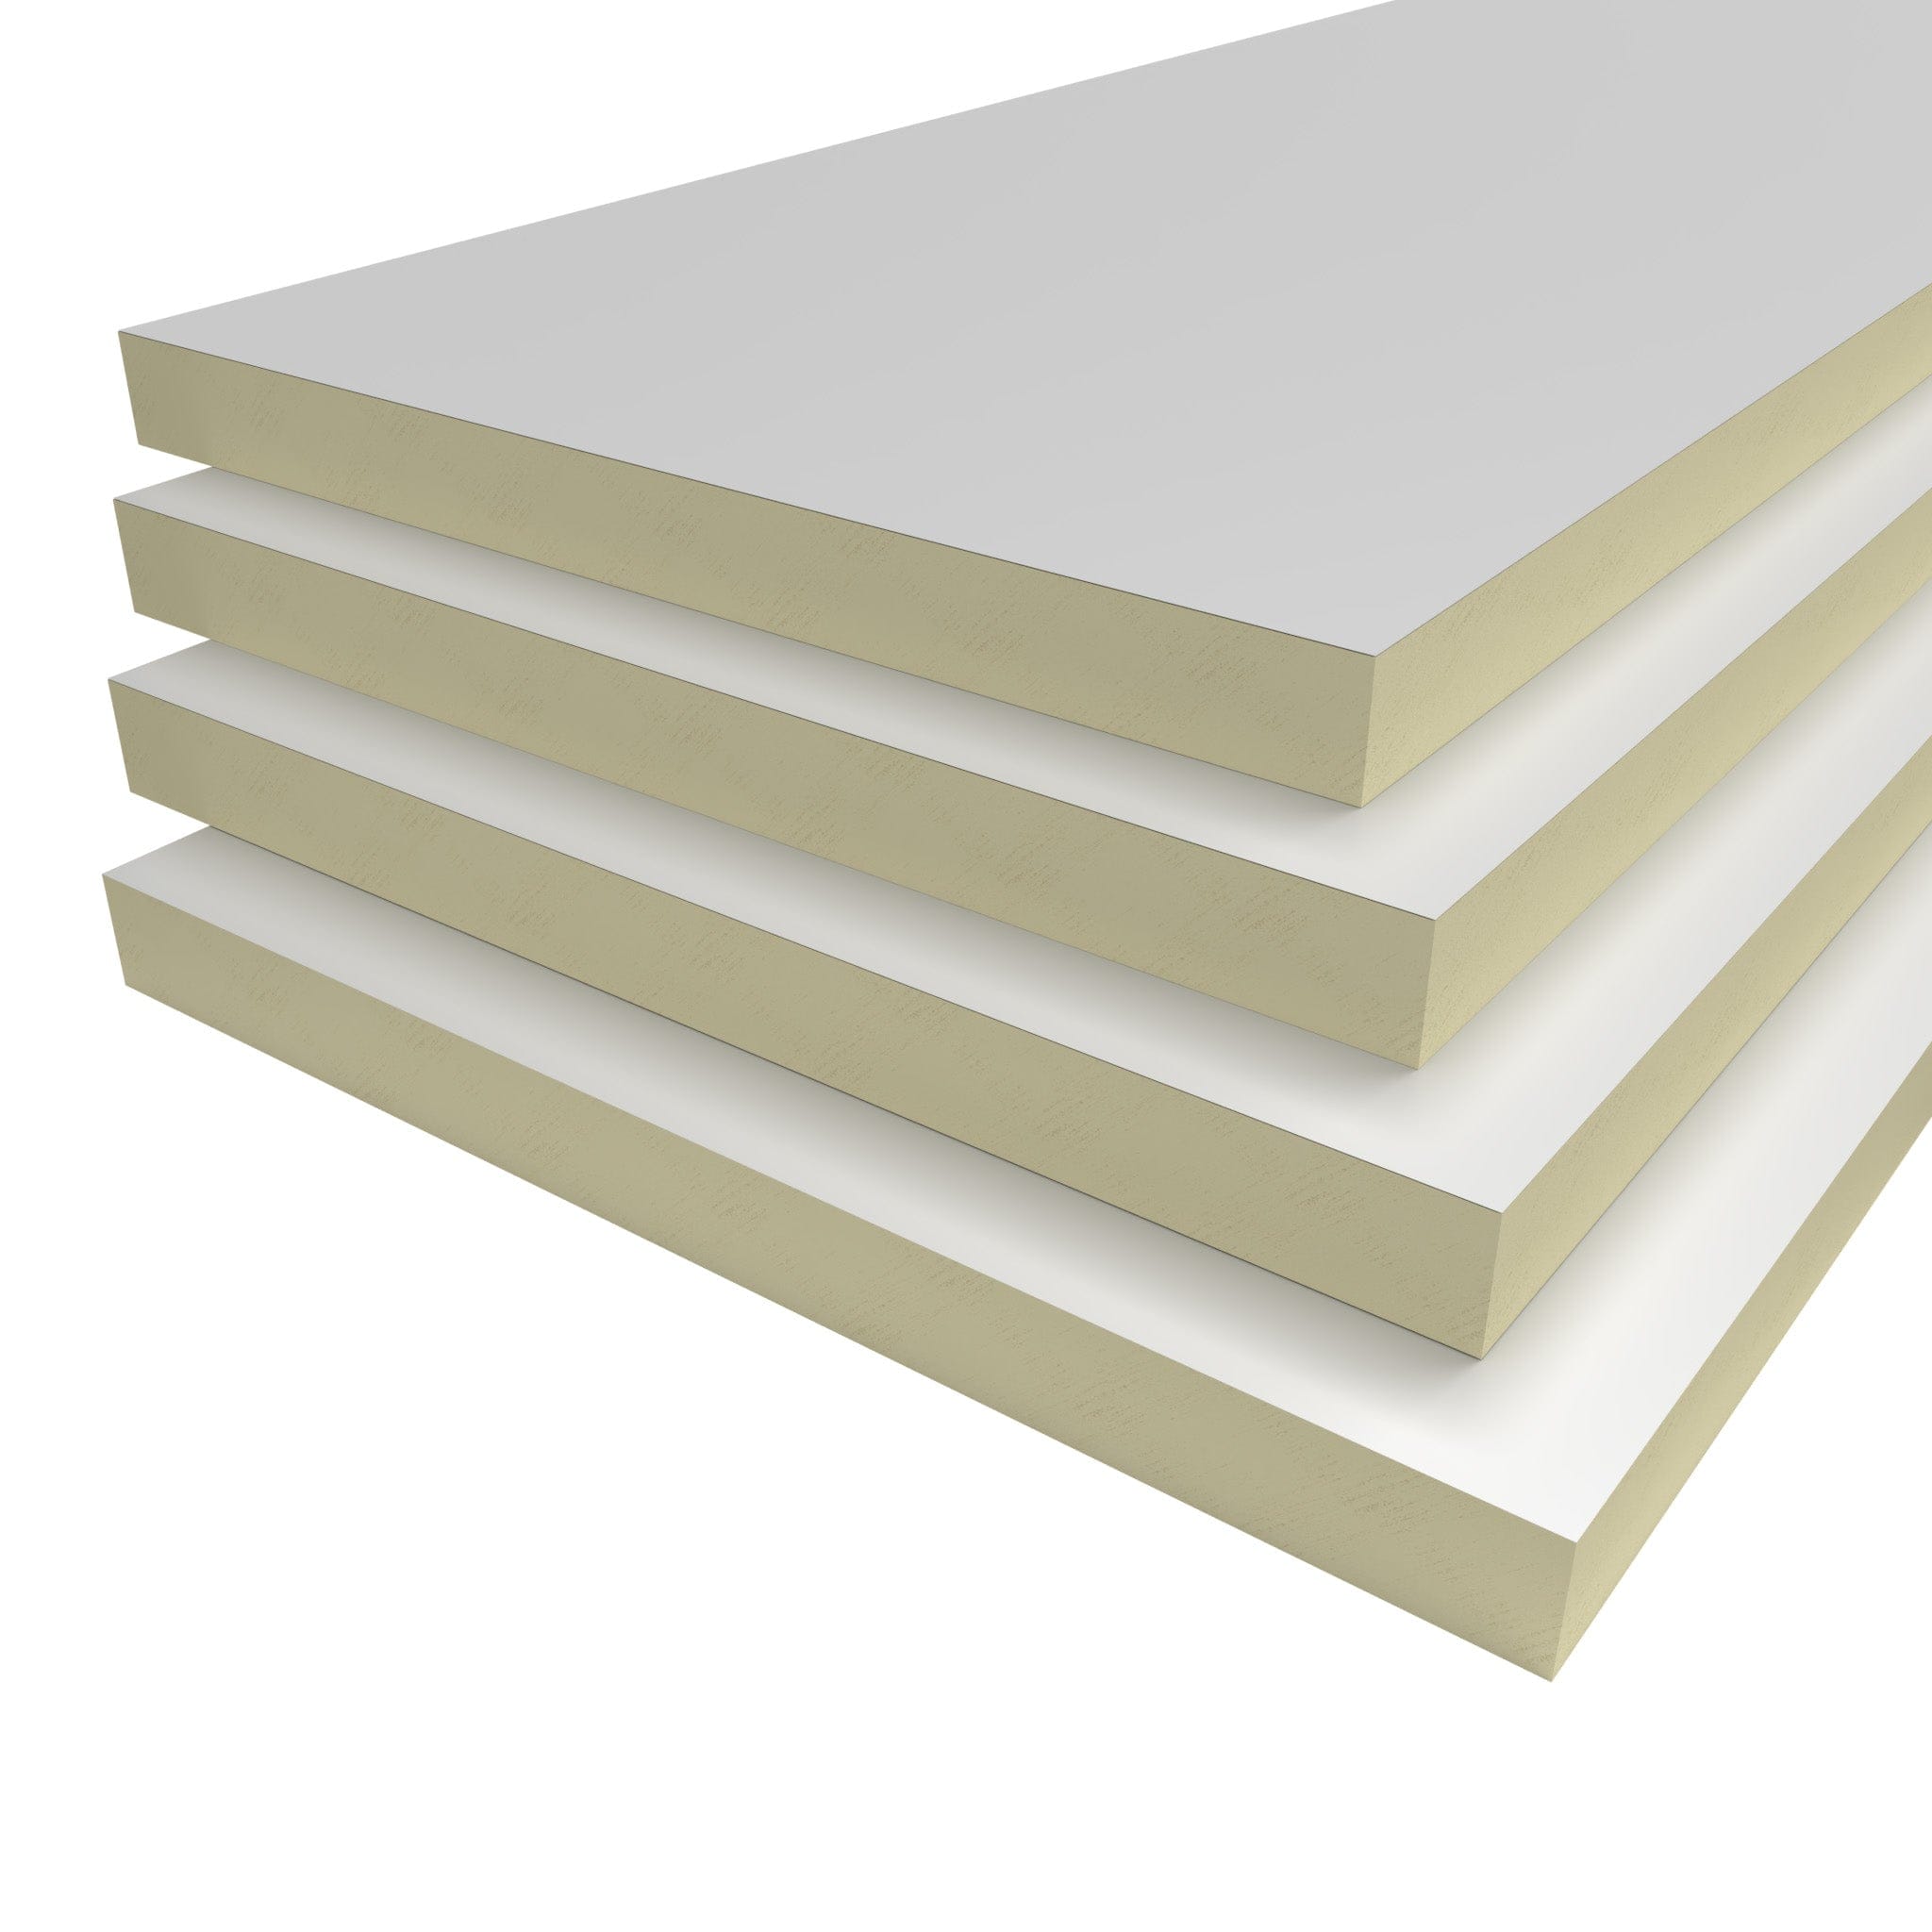 InsulationUK Pir Insulation Strips 1200mm x 600mm x 25mm - Pack of 4 PIR Insulation Strips | 1200mm x 600mm | Pack of 4 IUK01561